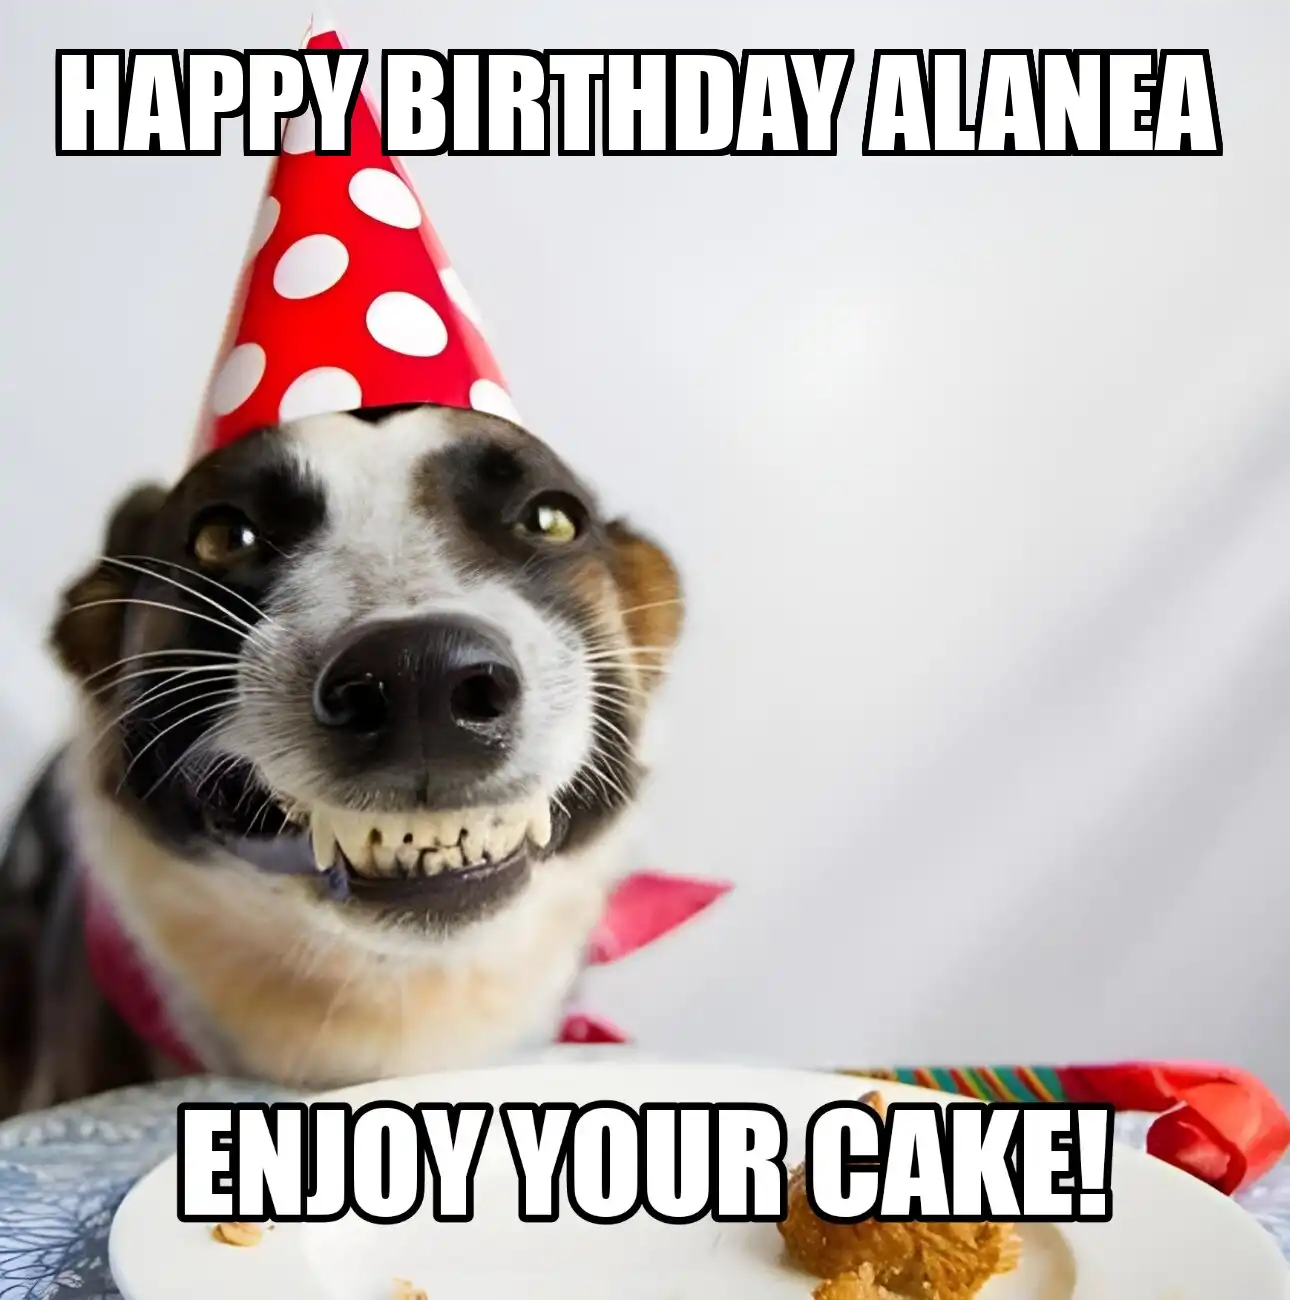 Happy Birthday Alanea Enjoy Your Cake Dog Meme